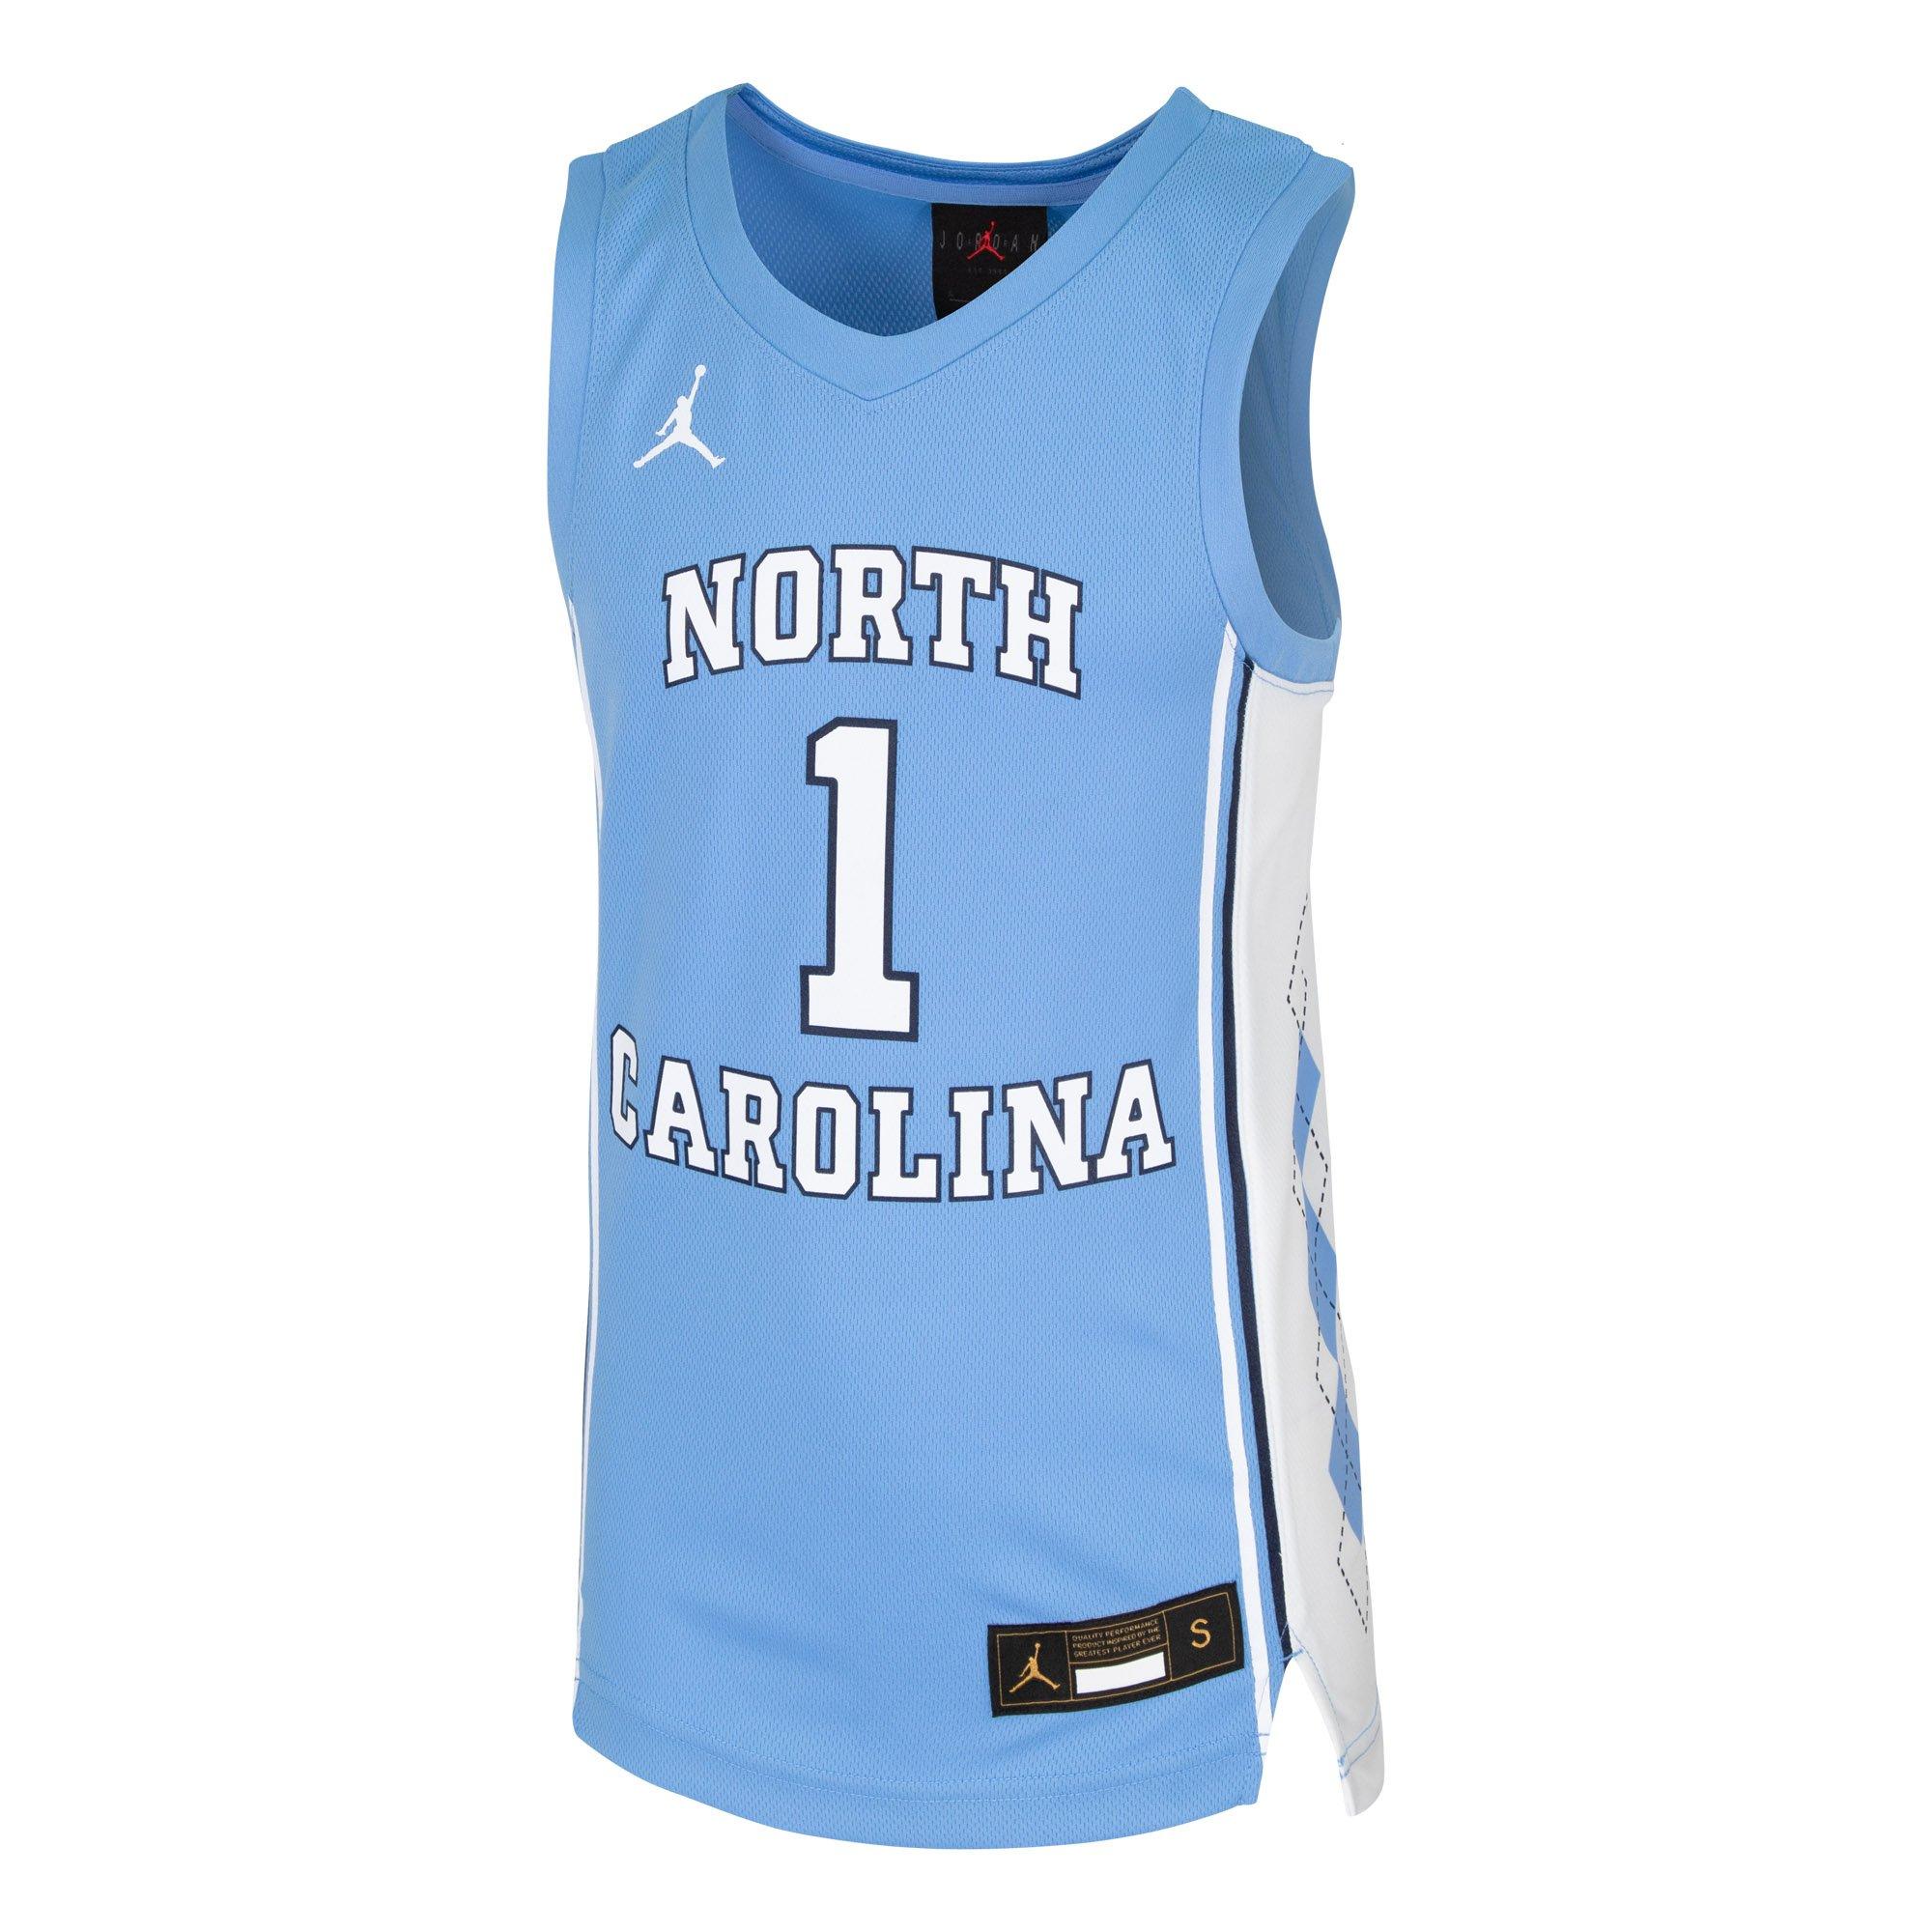 Tar Heels NCAA championship merchandise